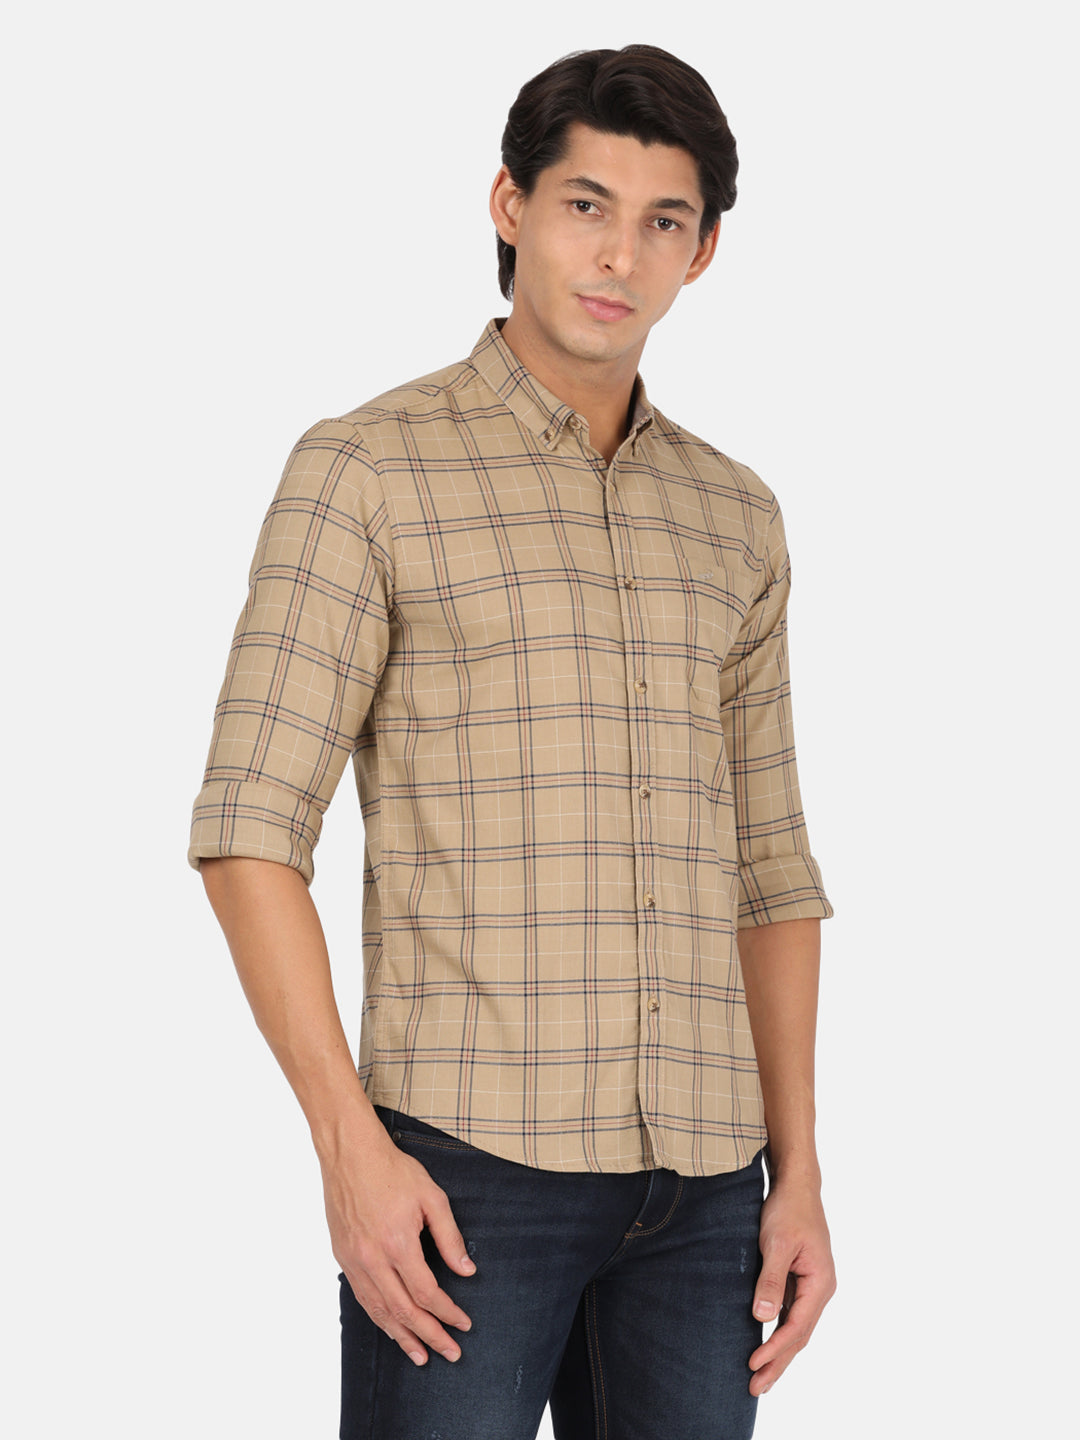 Casual Full Sleeve Slim Fit Checks Khaki with Collar Shirt for Men